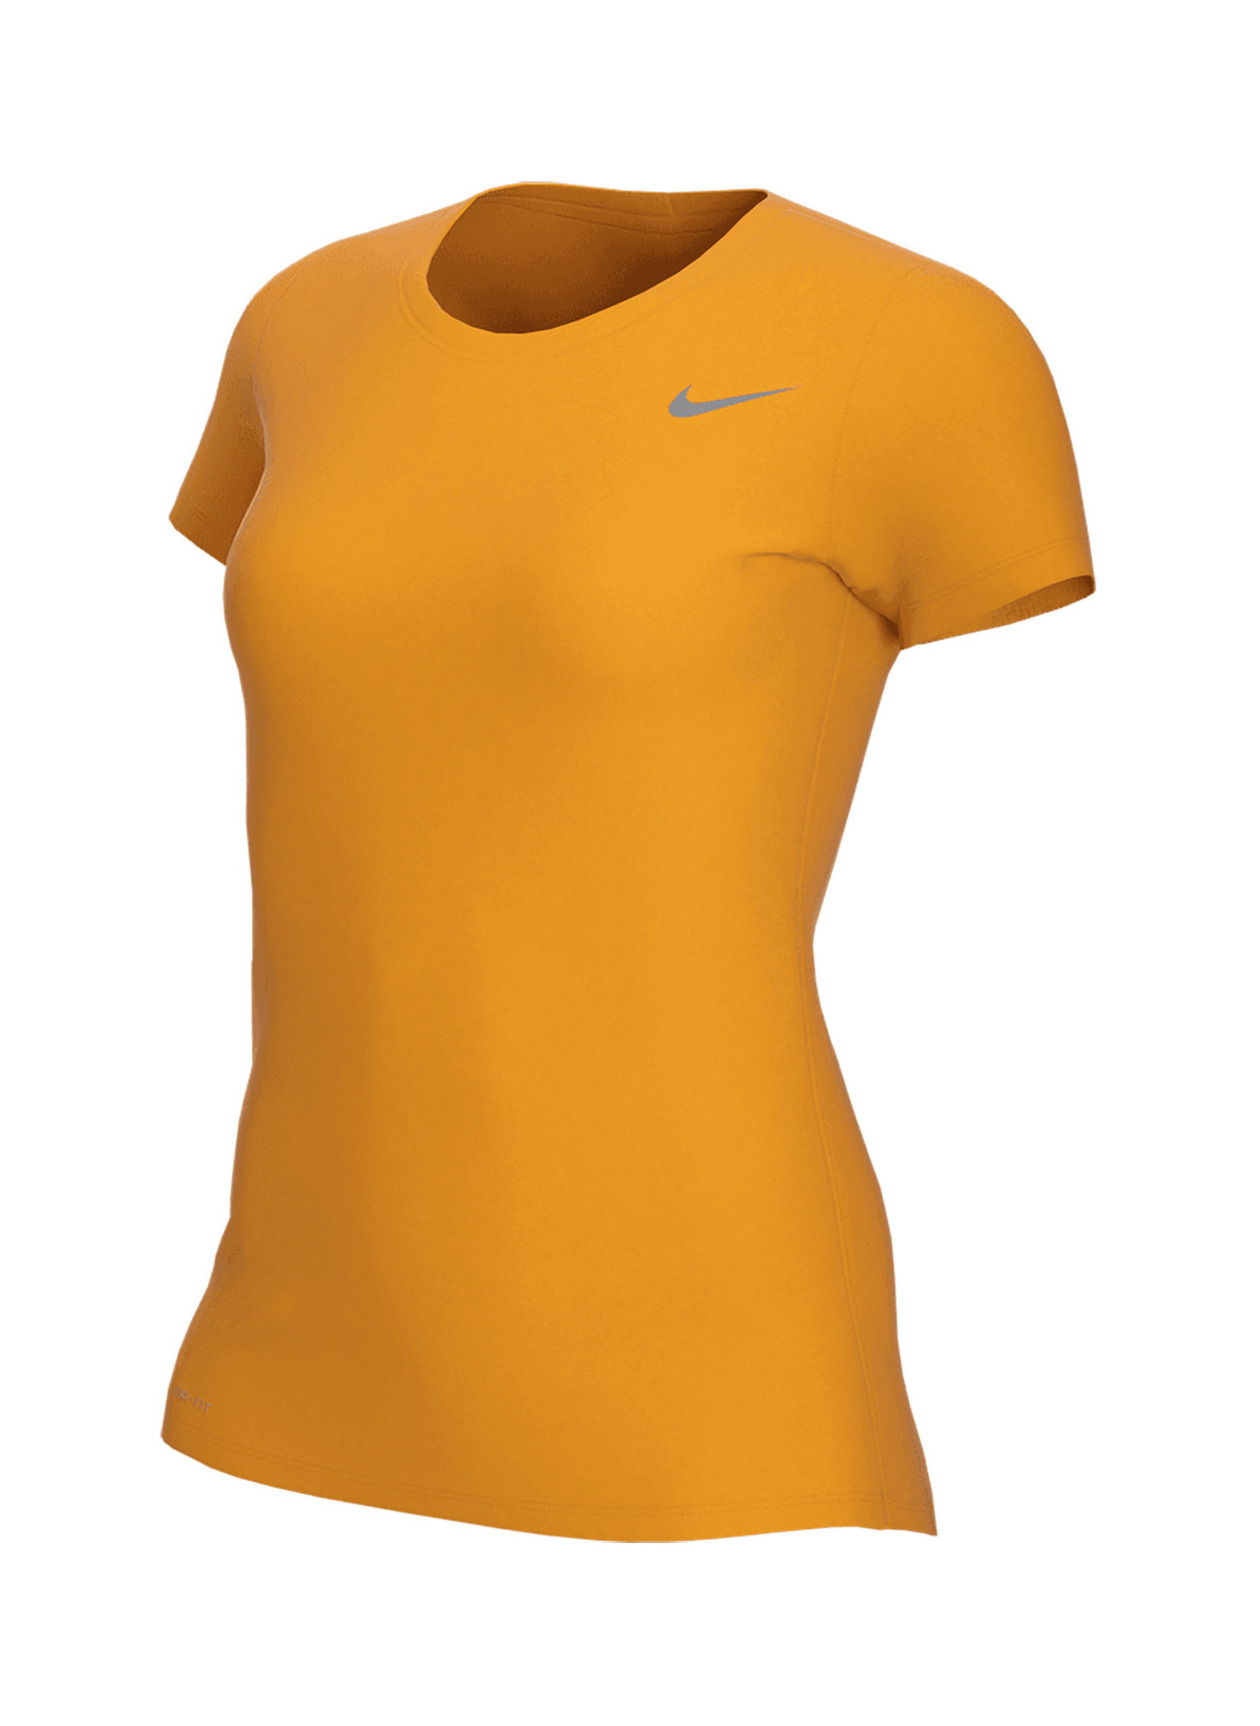 Nike Women's Bright Ceramic Legend Training T-Shirt